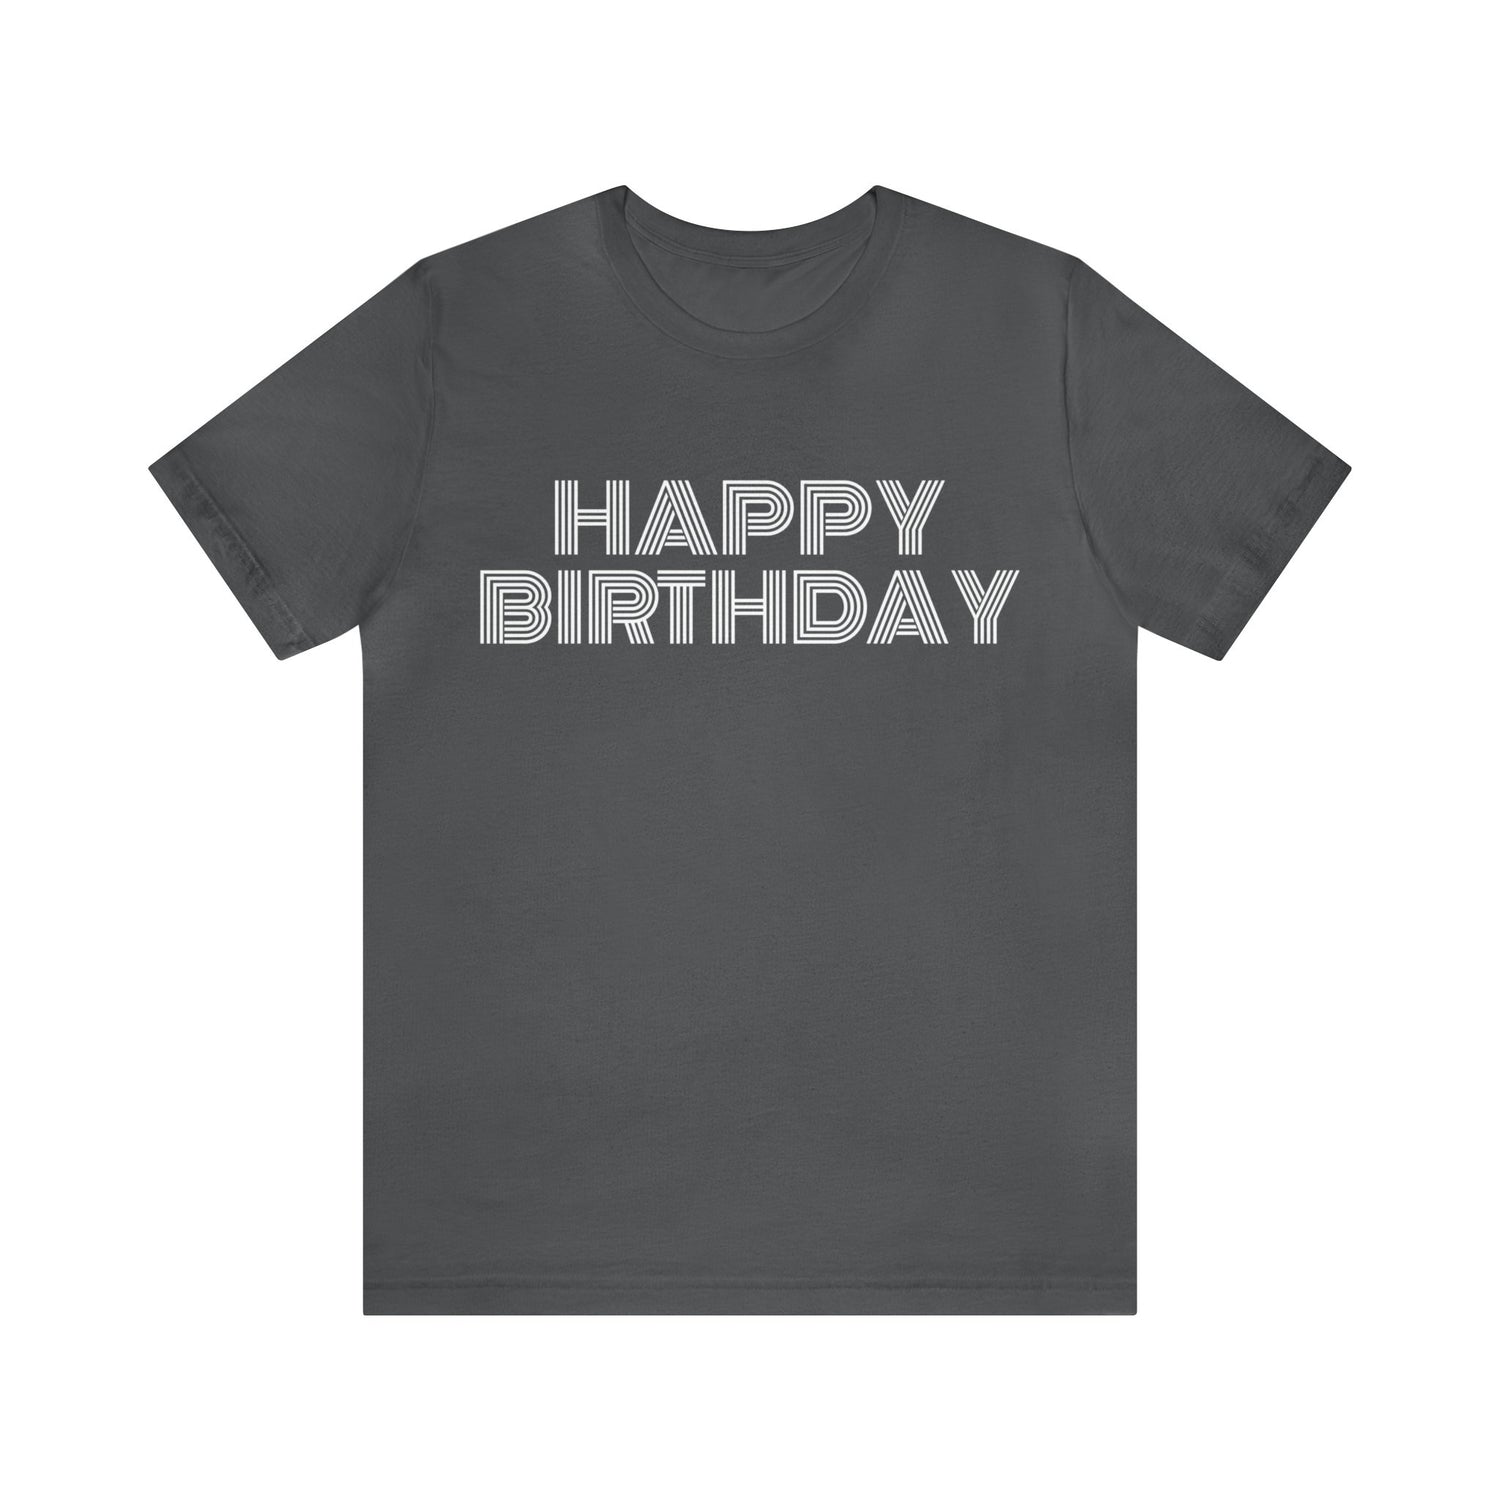 Asphalt T-Shirt Tshirt Gift for Friends and Family Short Sleeve T Shirt Birthday Petrova Designs